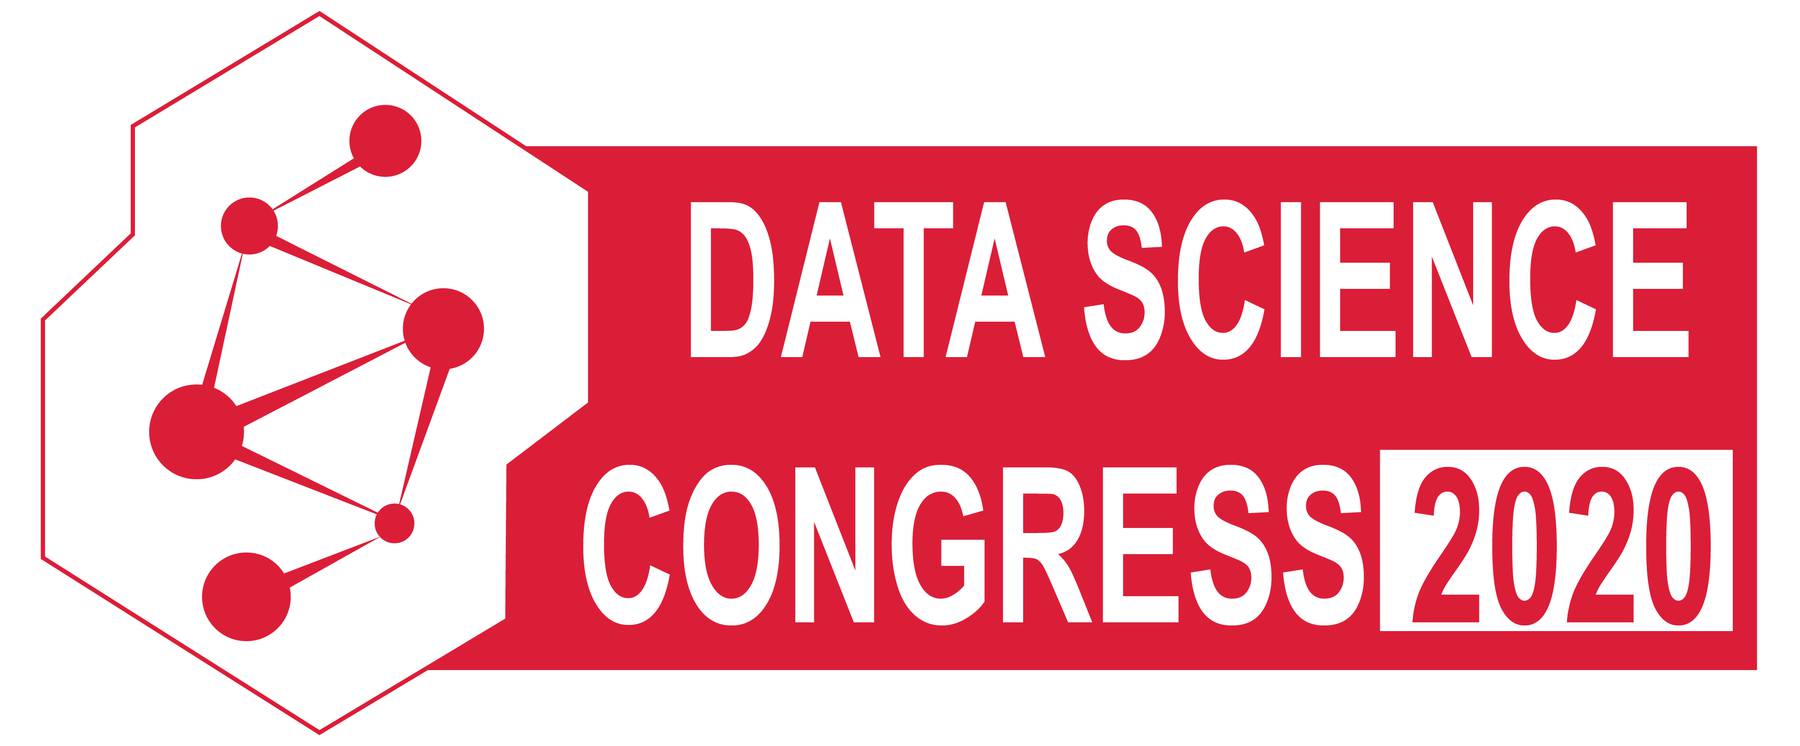 Data Science Congress 2020